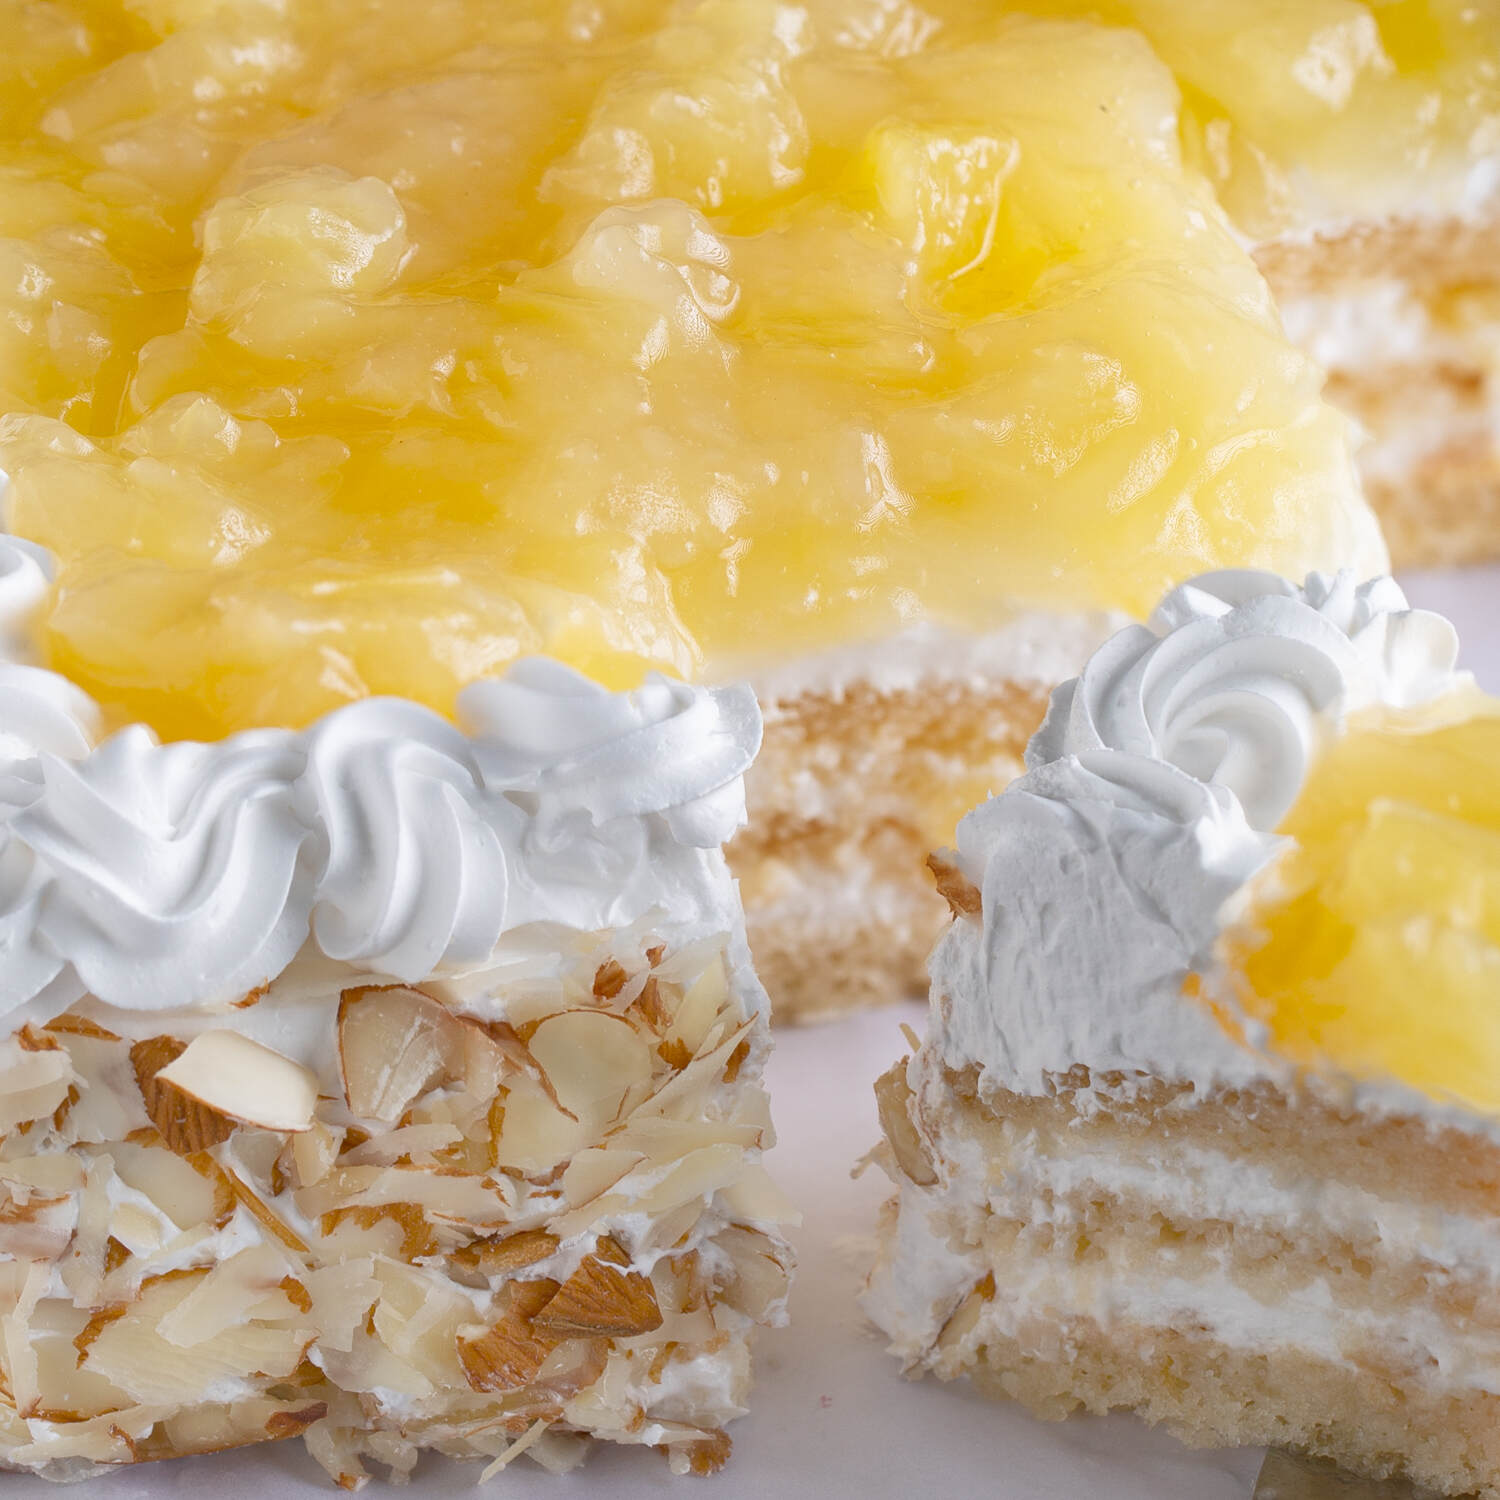 PINEAPPLE CREAM CAKE - Delicious Dessert - YouTube